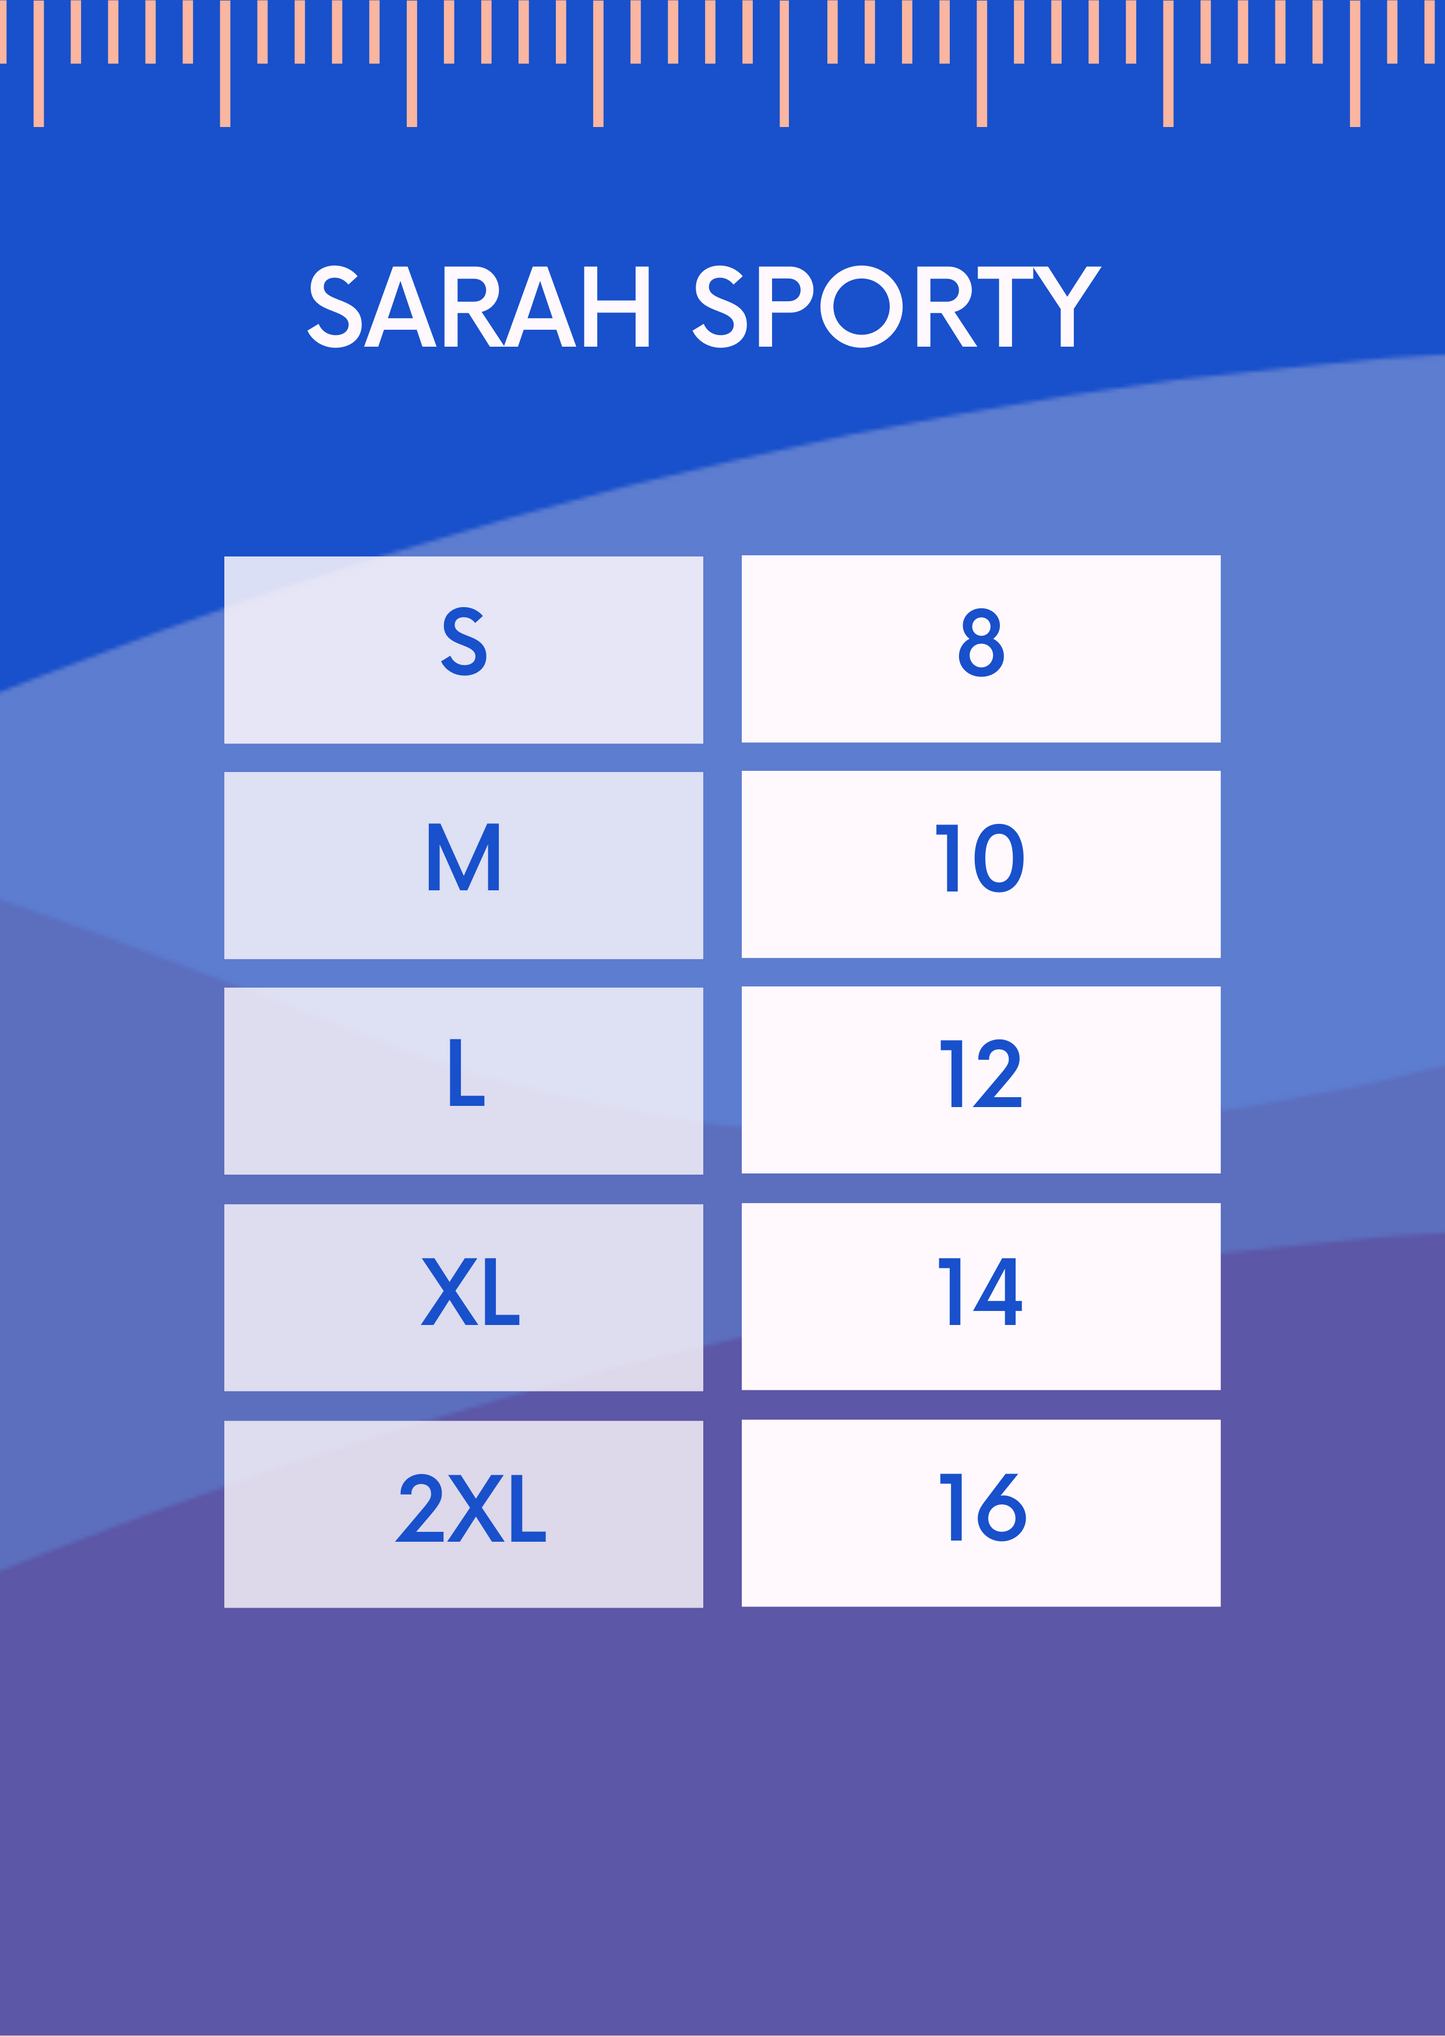 Sarah Sporty Knickers